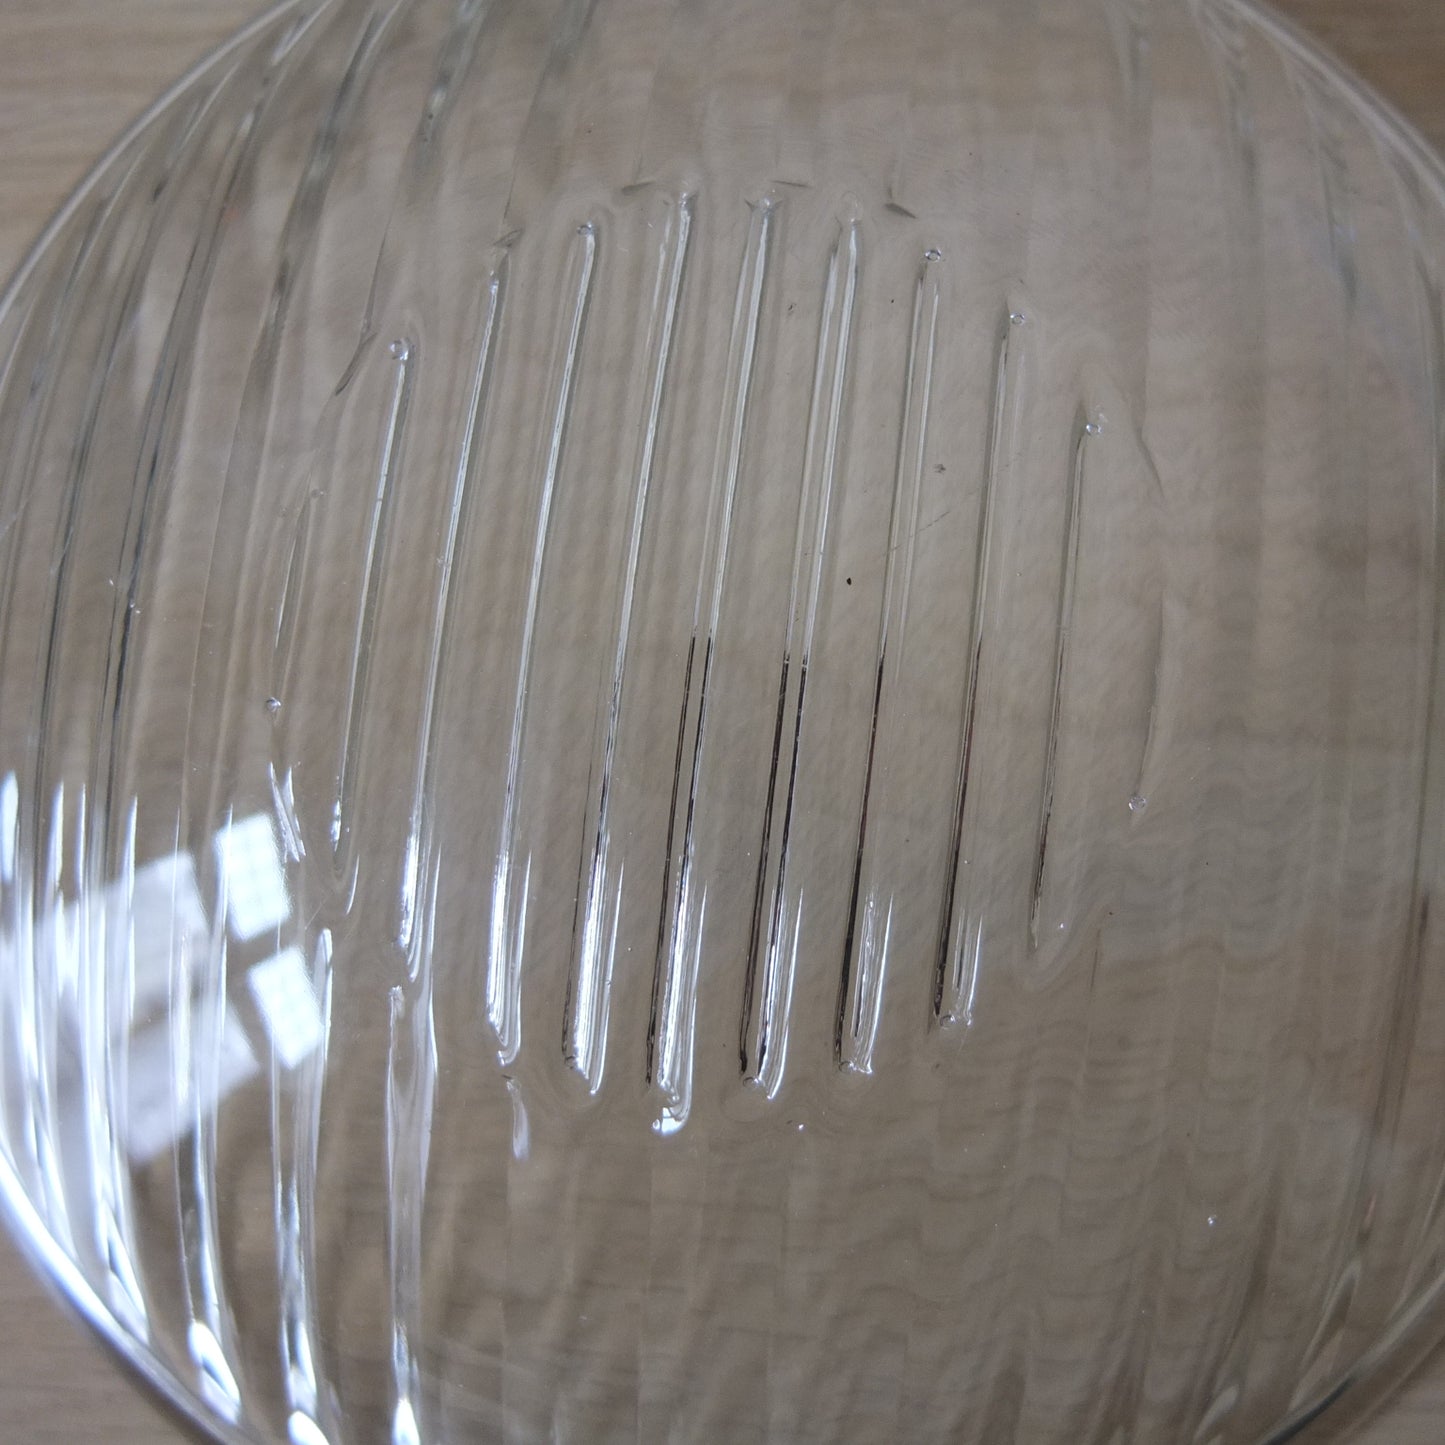 P5/060 Headlamp Glass -8" Domed (not original)